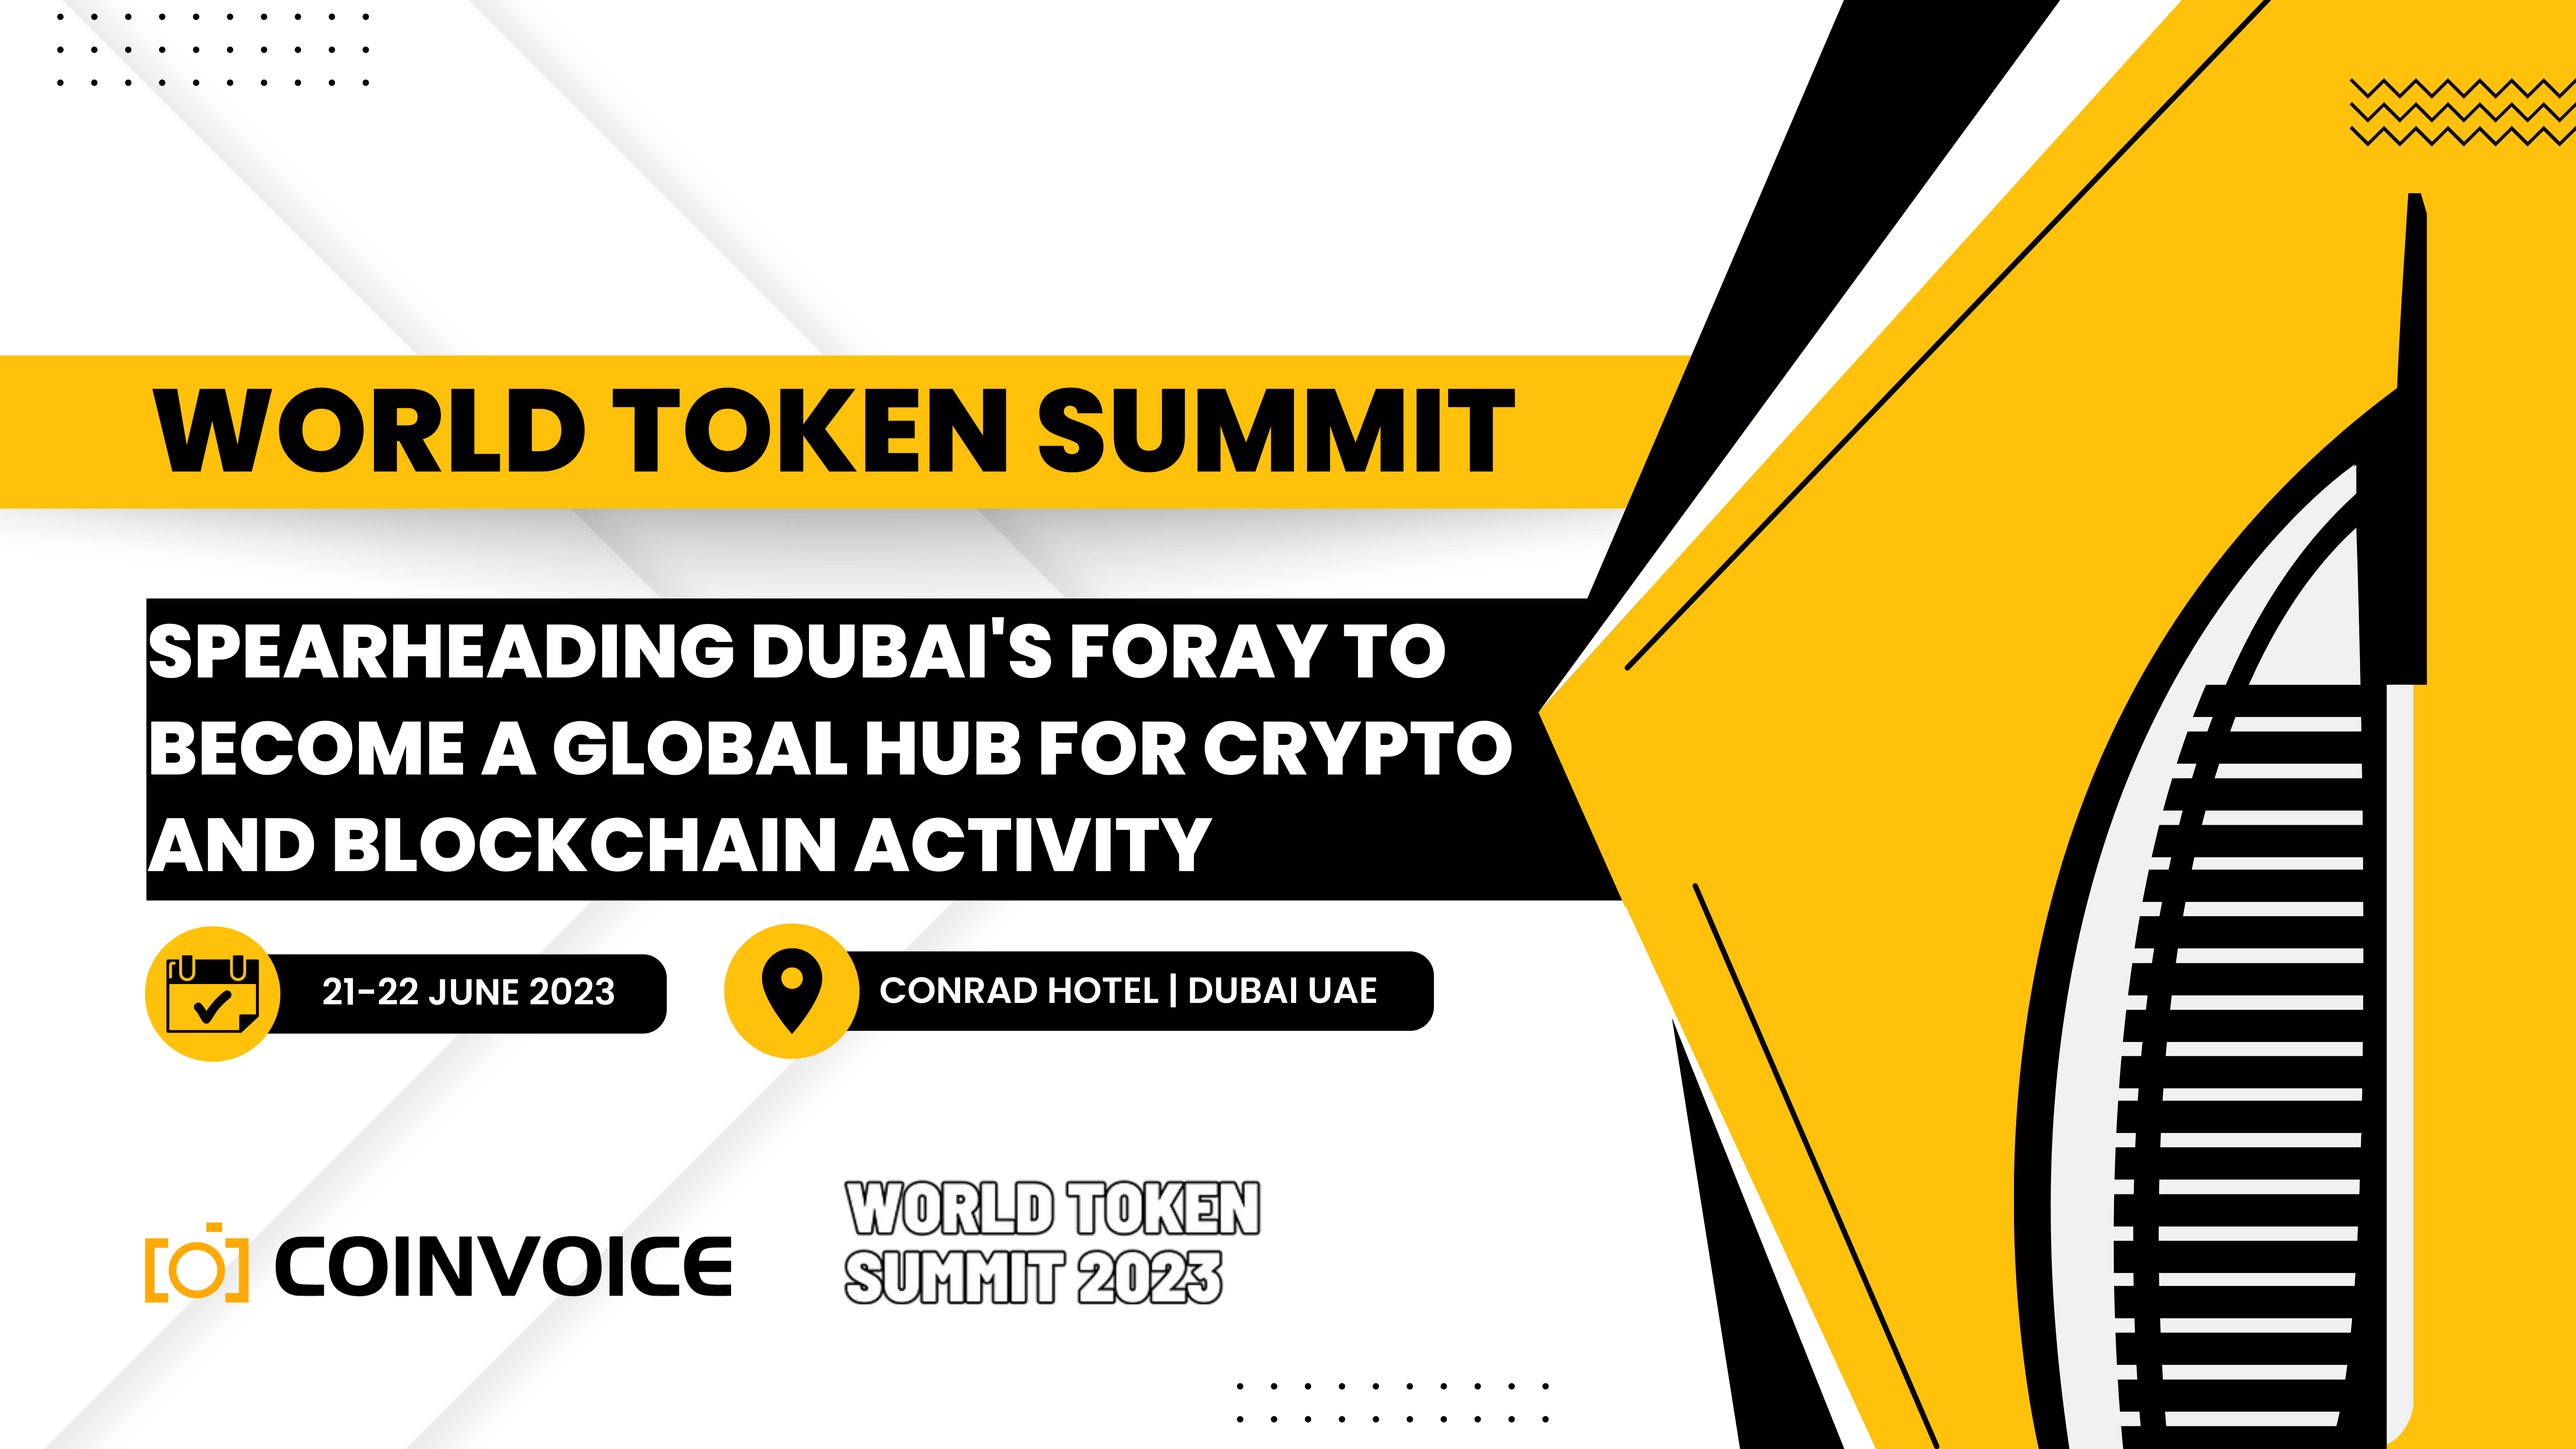 World Token Summit: Spearheading Dubai’s Foray to Become a Global Hub for Crypto & Blockchain Activity